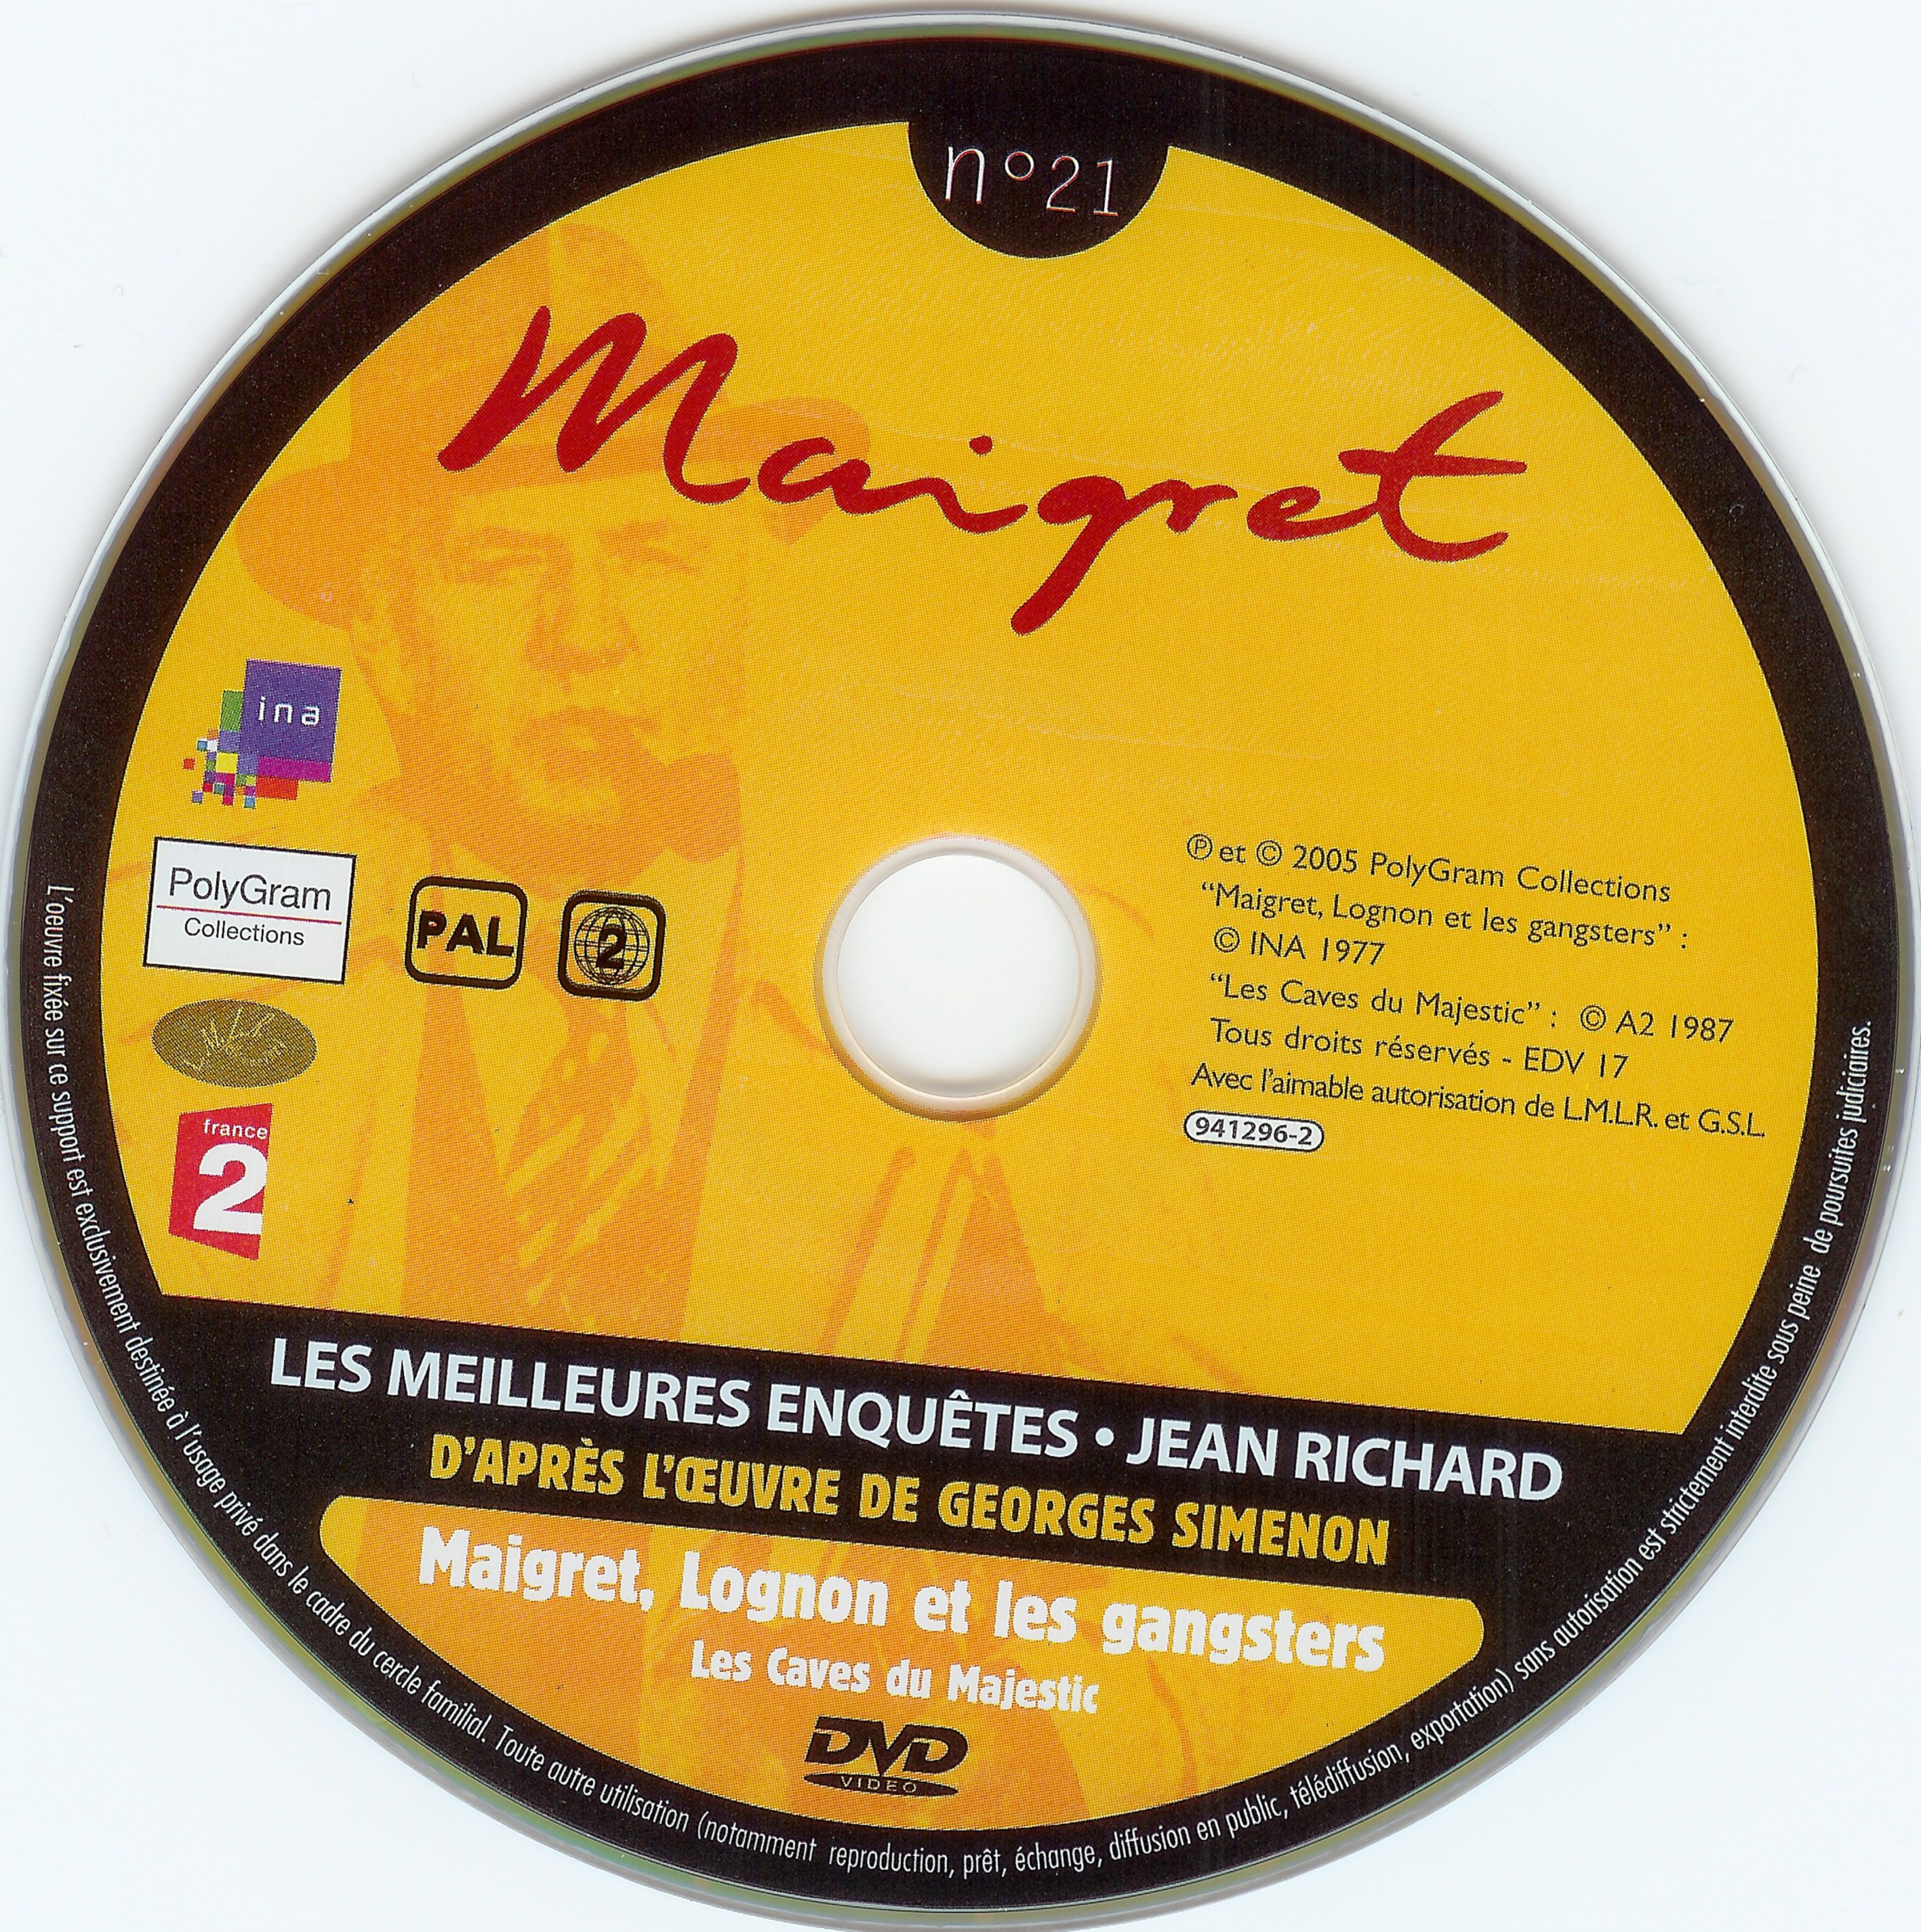 Maigret (Jean Richard) vol 21